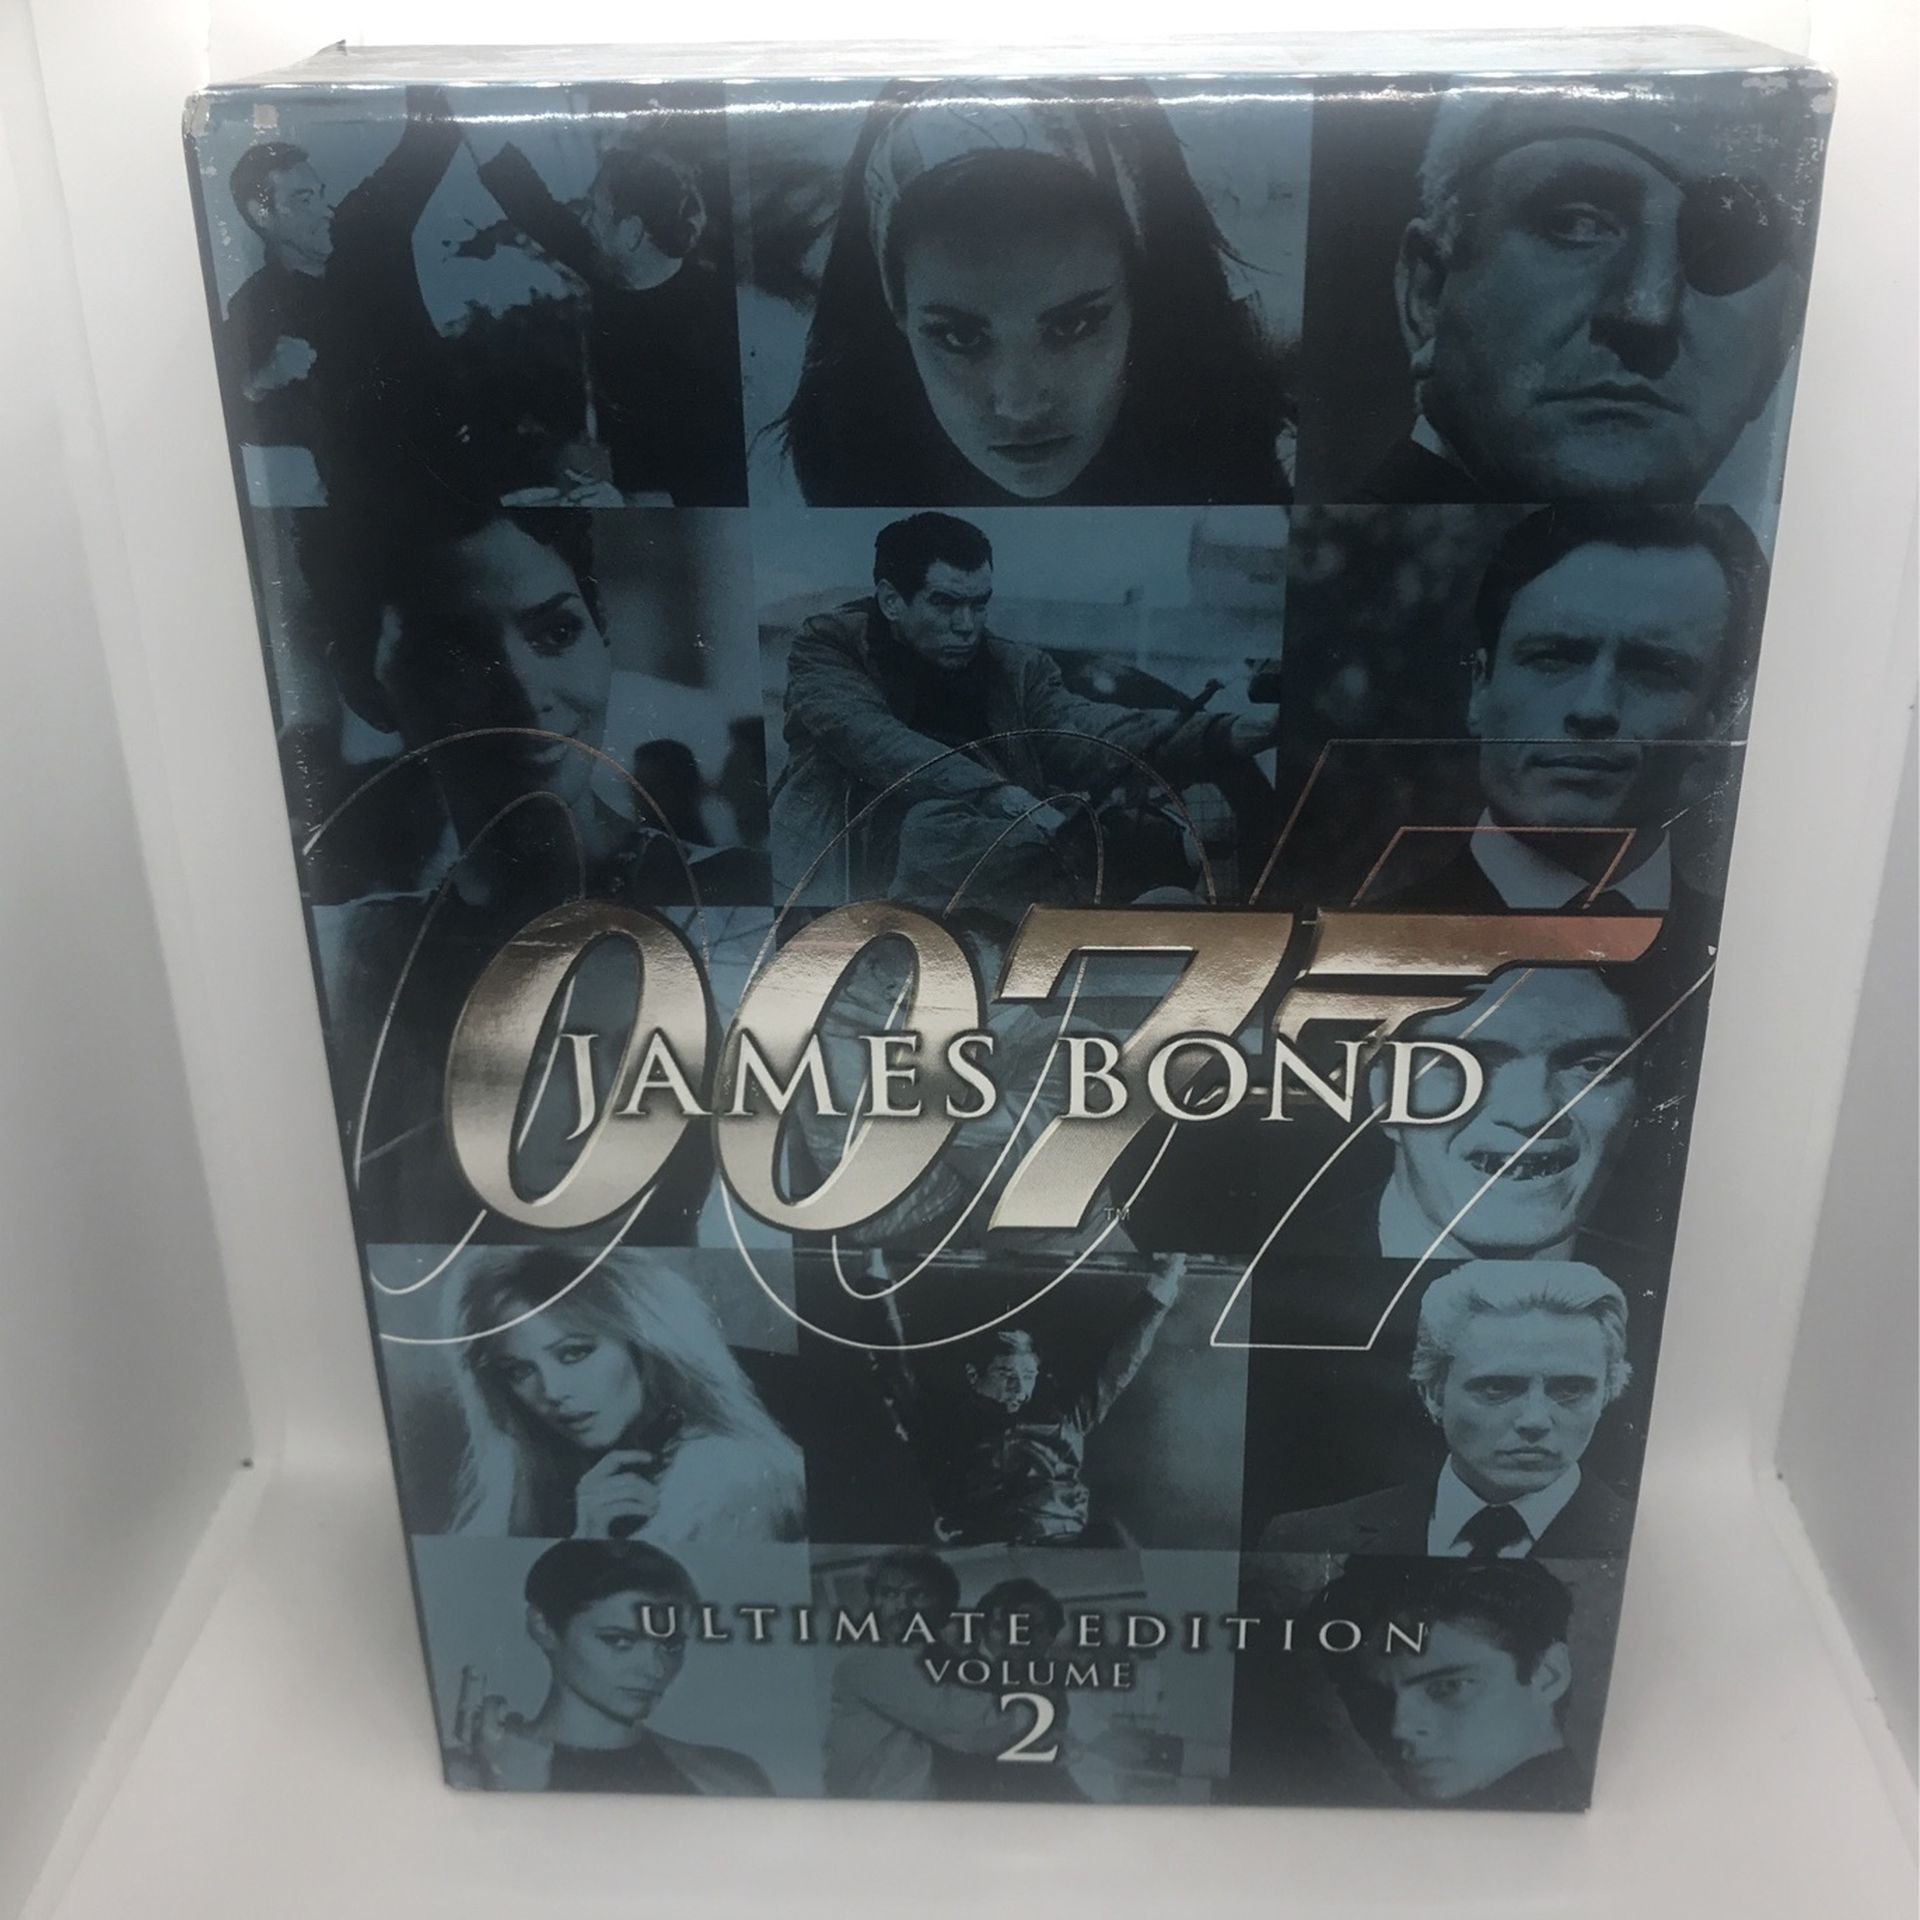 007 James Bond Ultimate Edition Vol 2 DVD